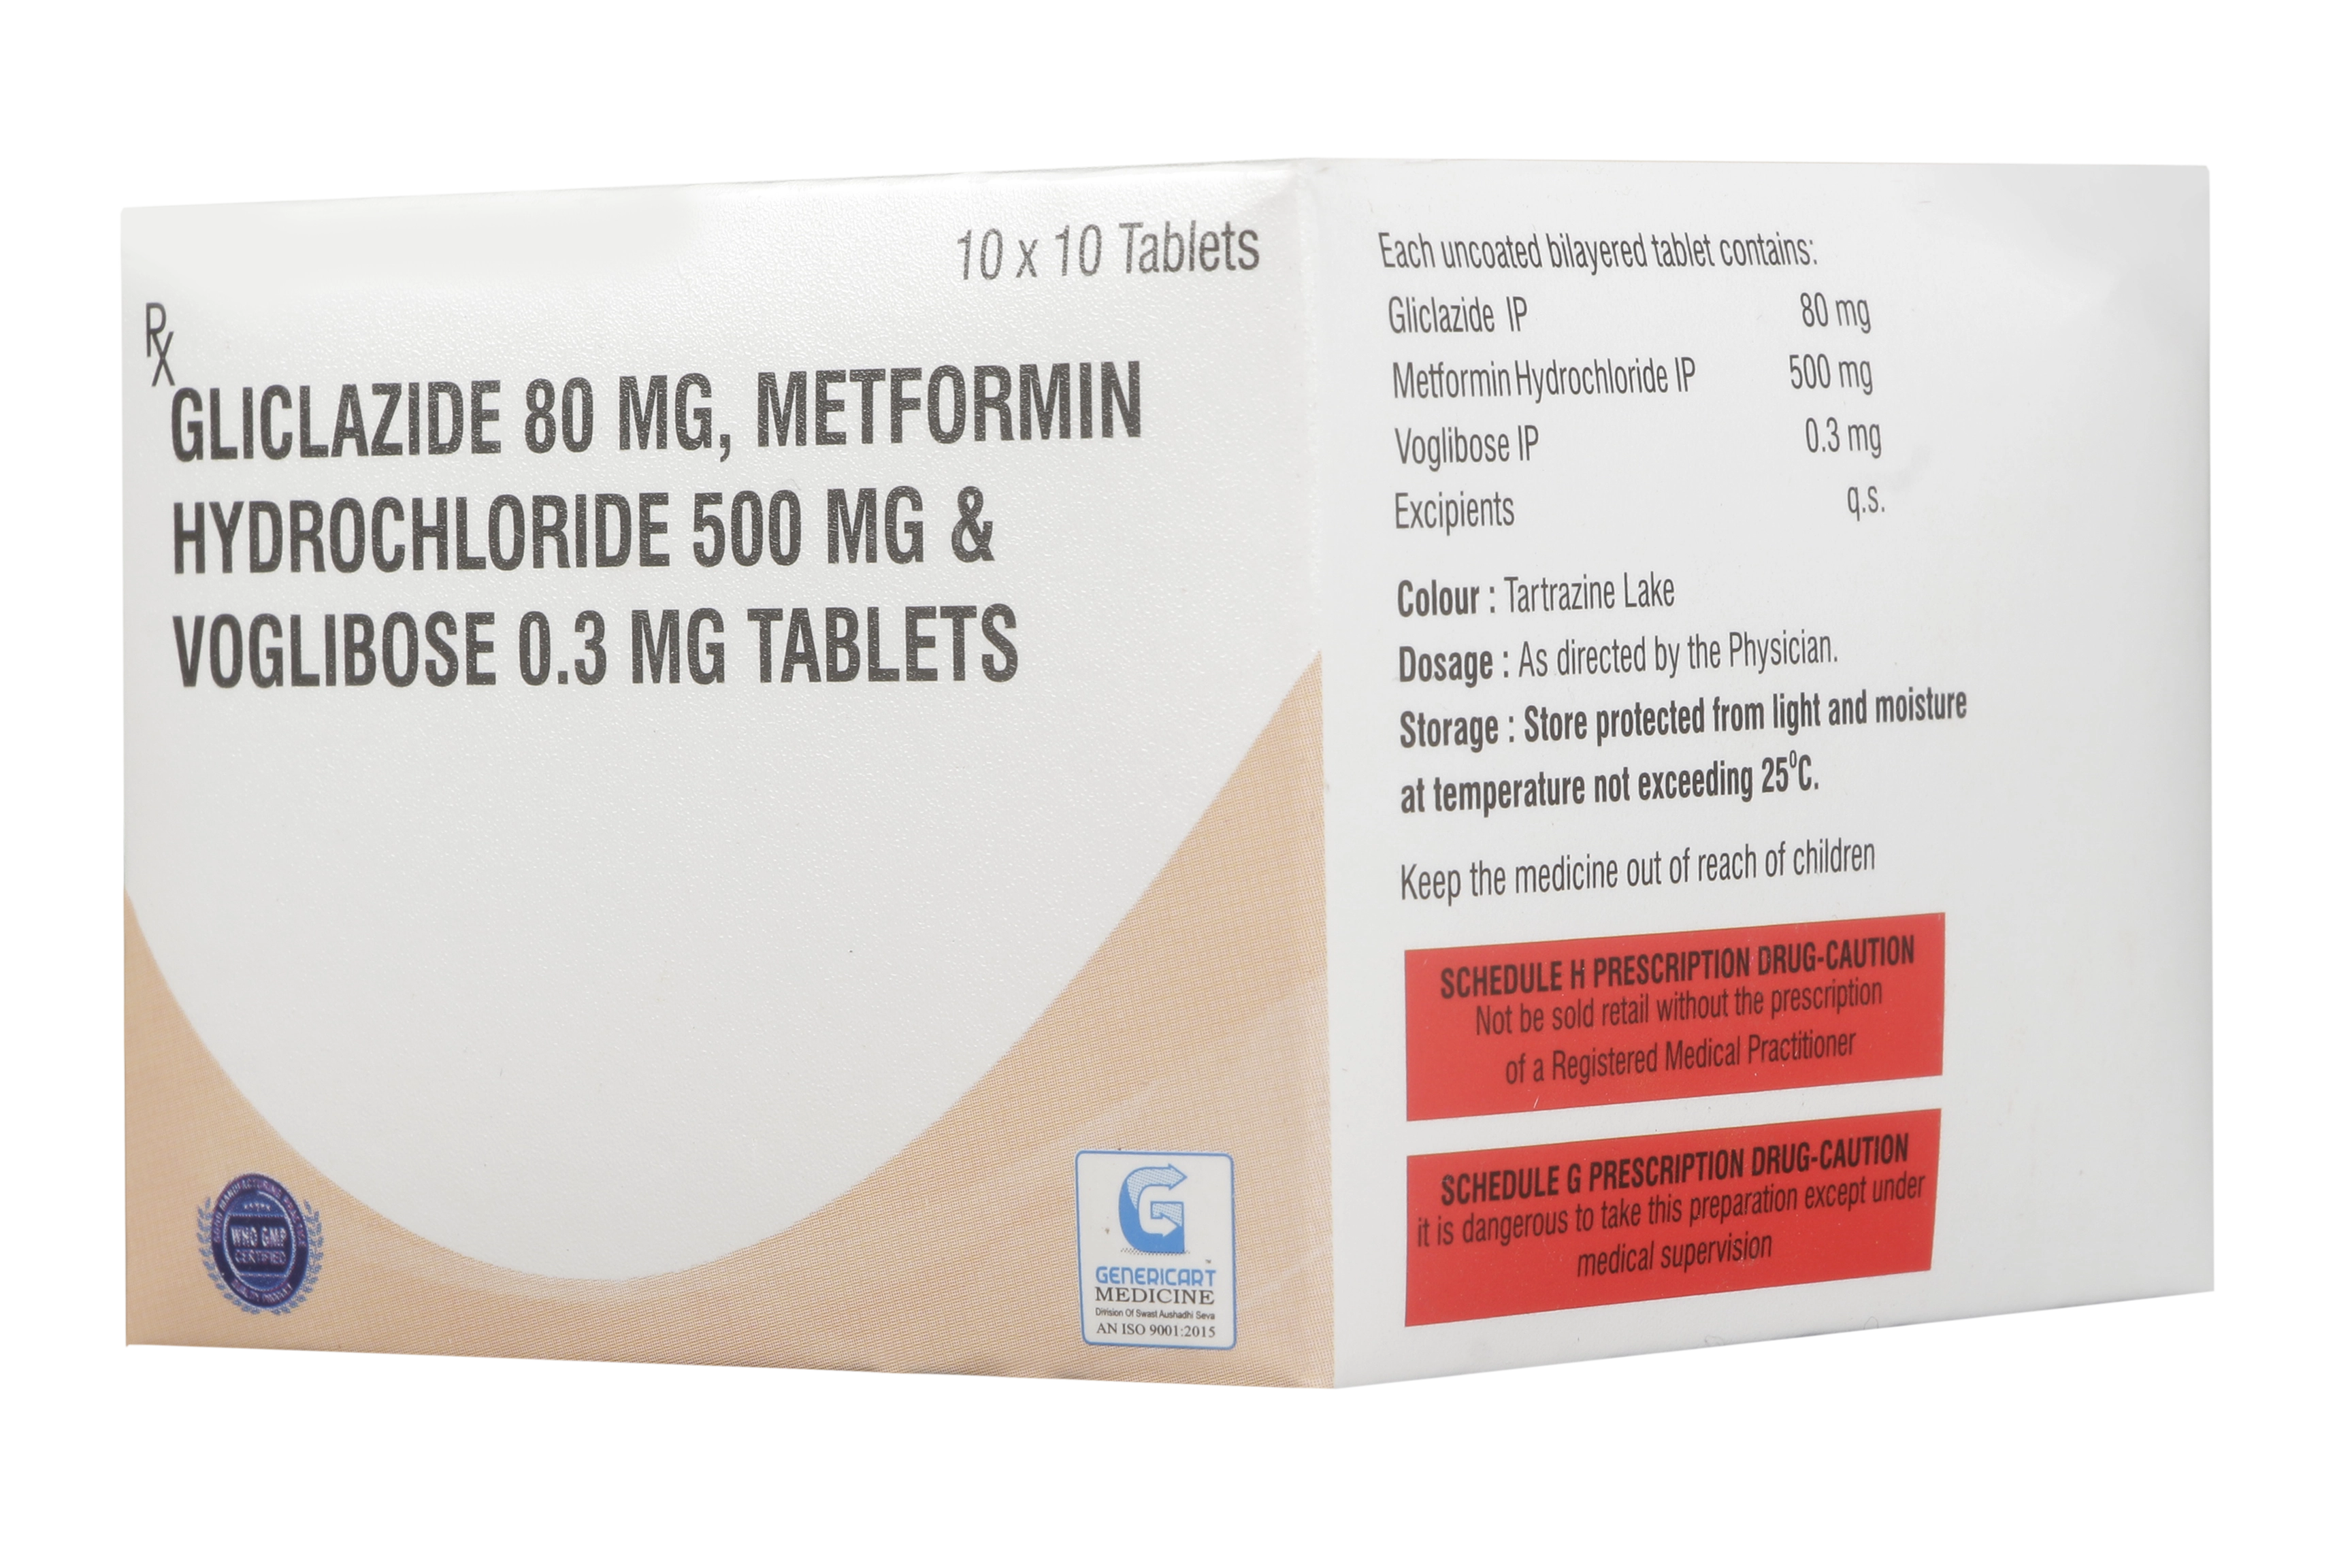 GLICLAZIDE 80 MG + METFORMIN HYDROCLORIDE 500 MG + VOGLIBOSE 0.3 MG